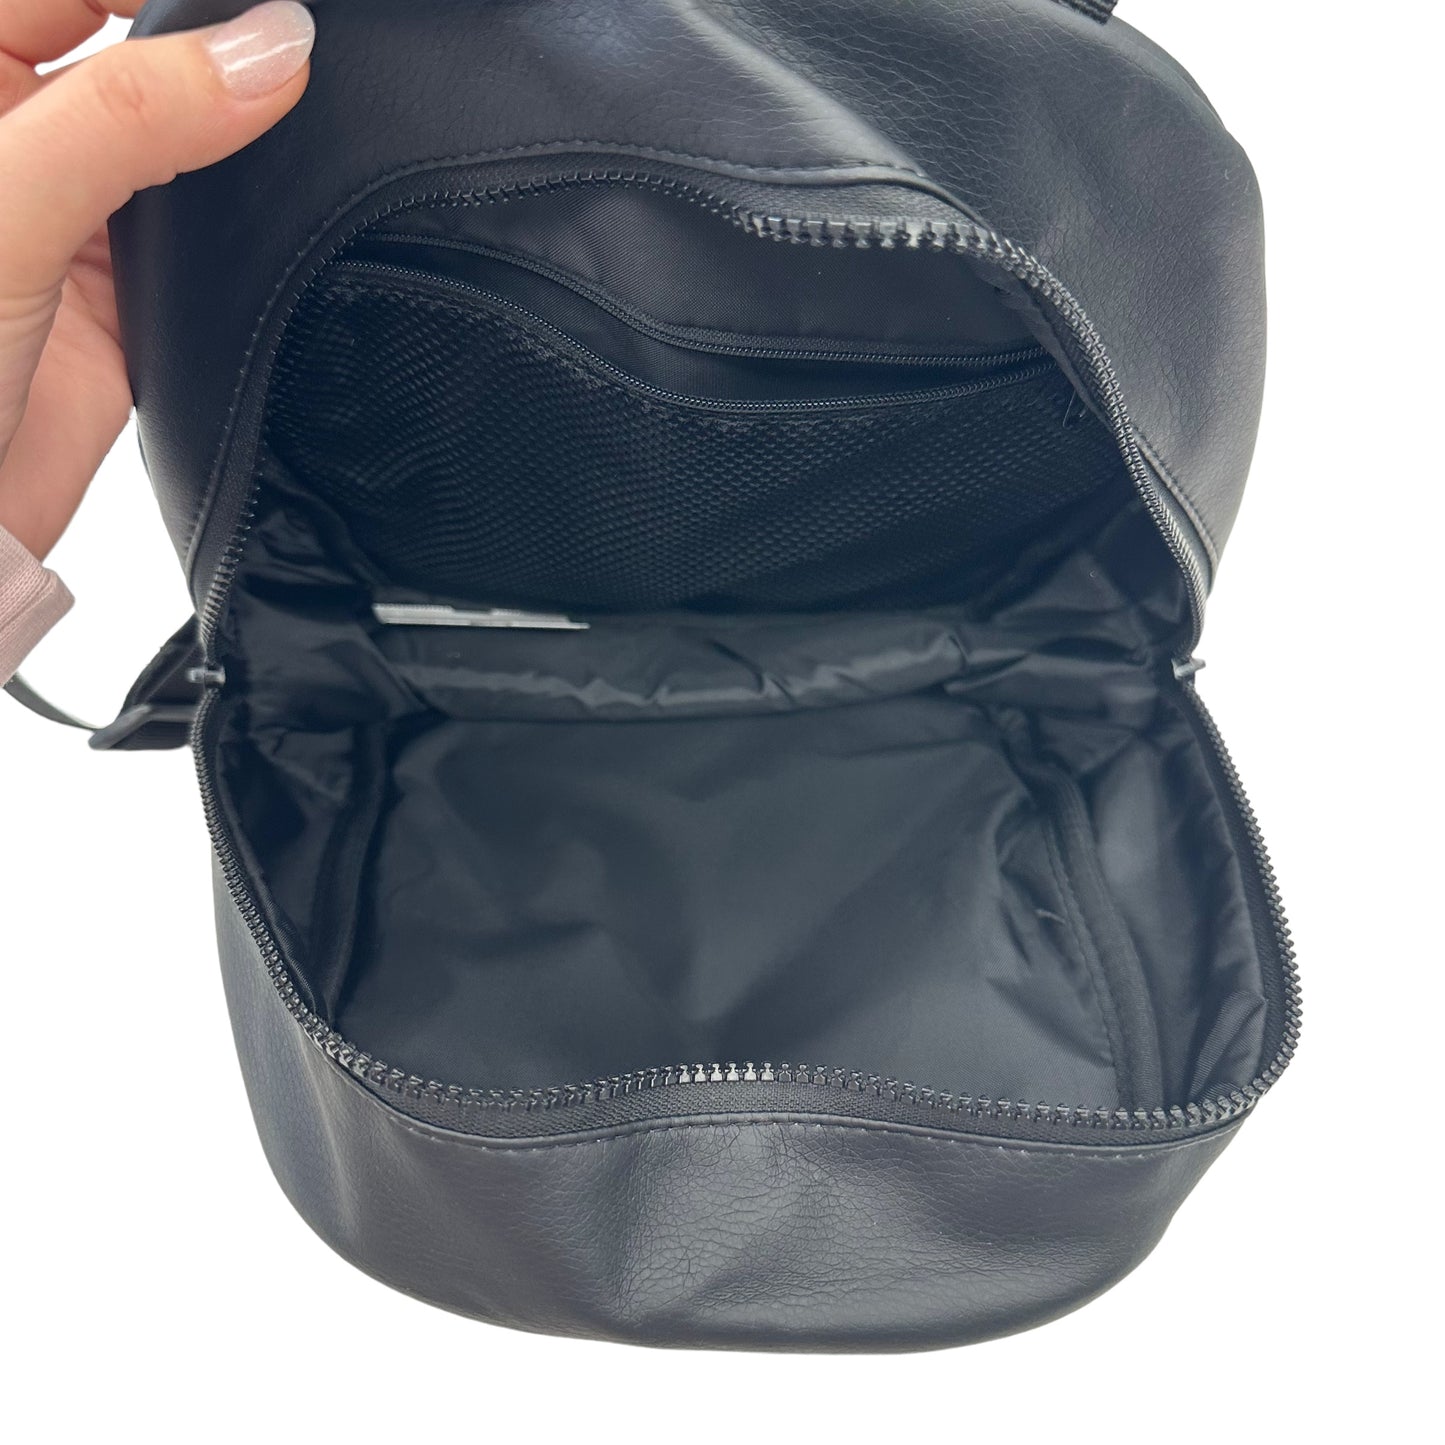 Backpack By Reebok  Size: Medium